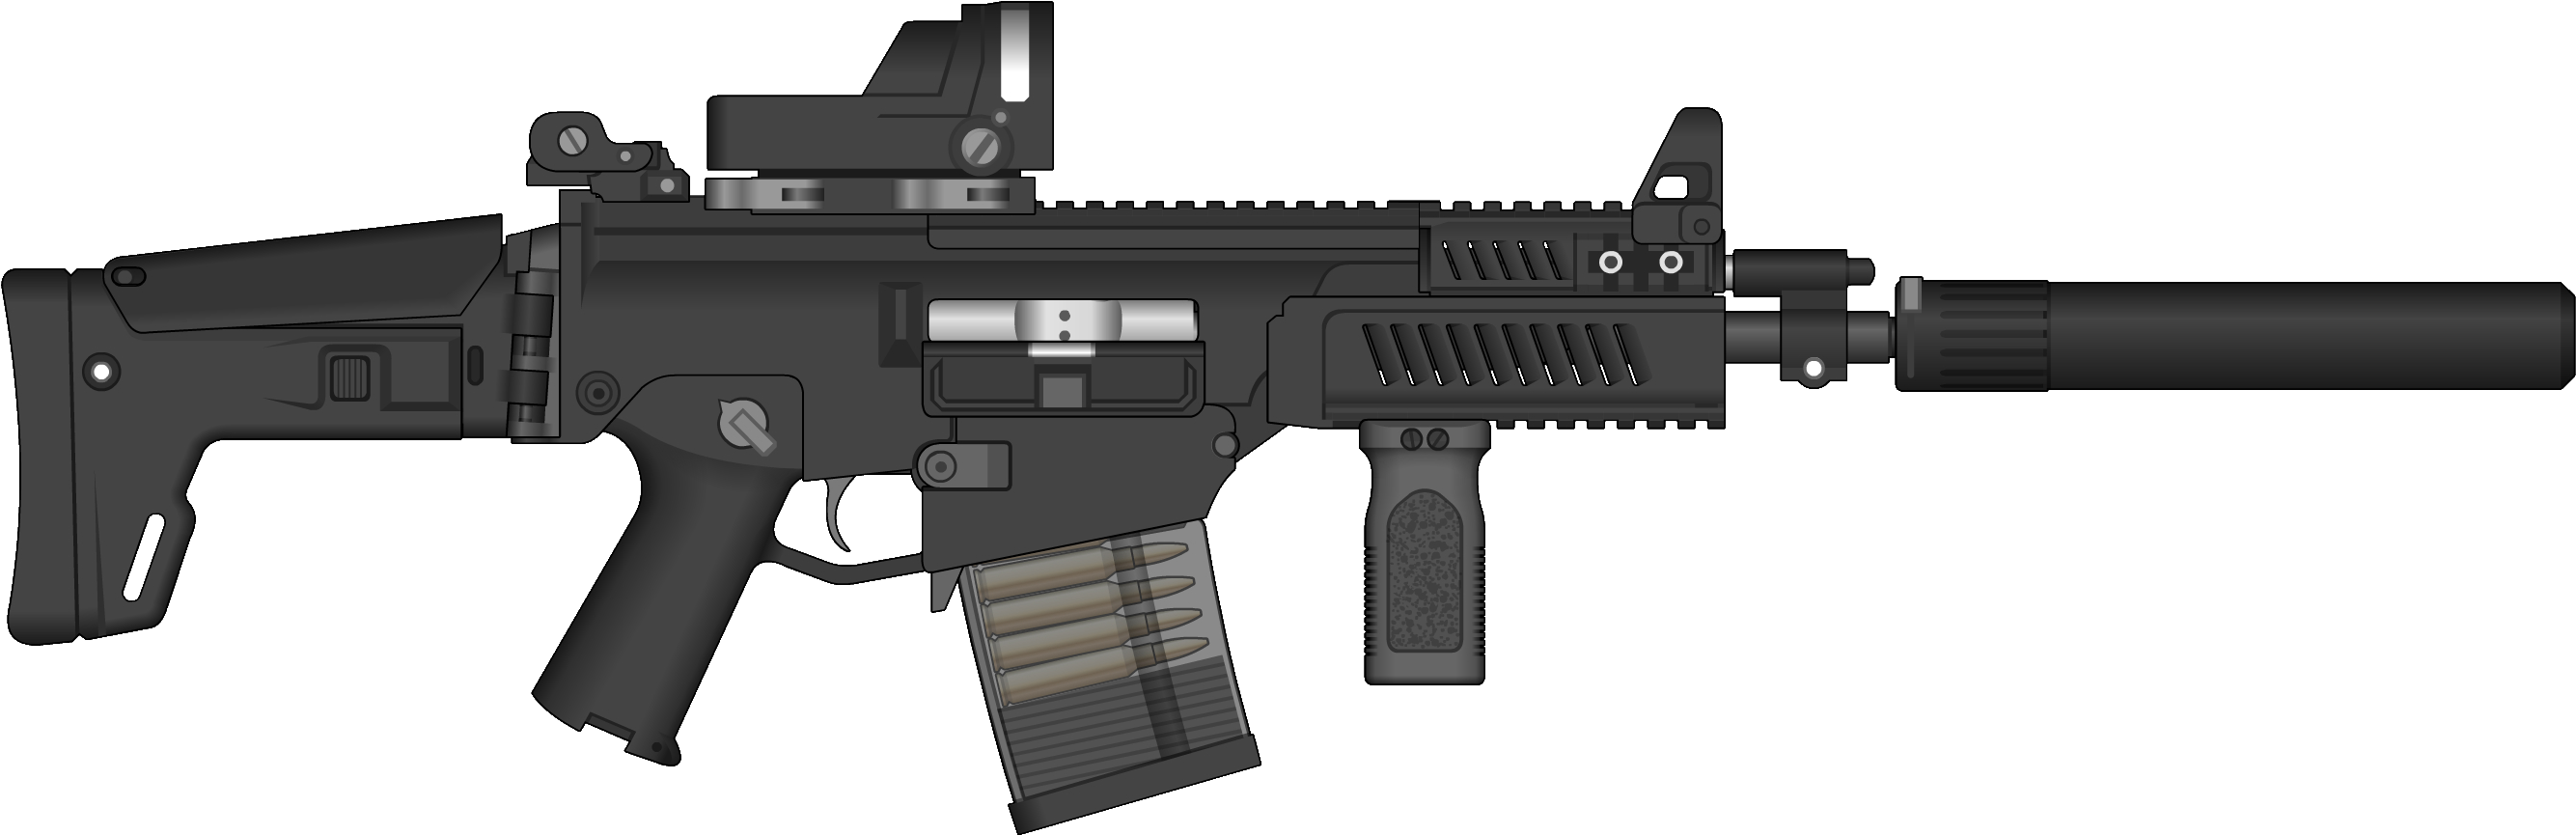 Modern Tactical Rifle Illustration PNG image